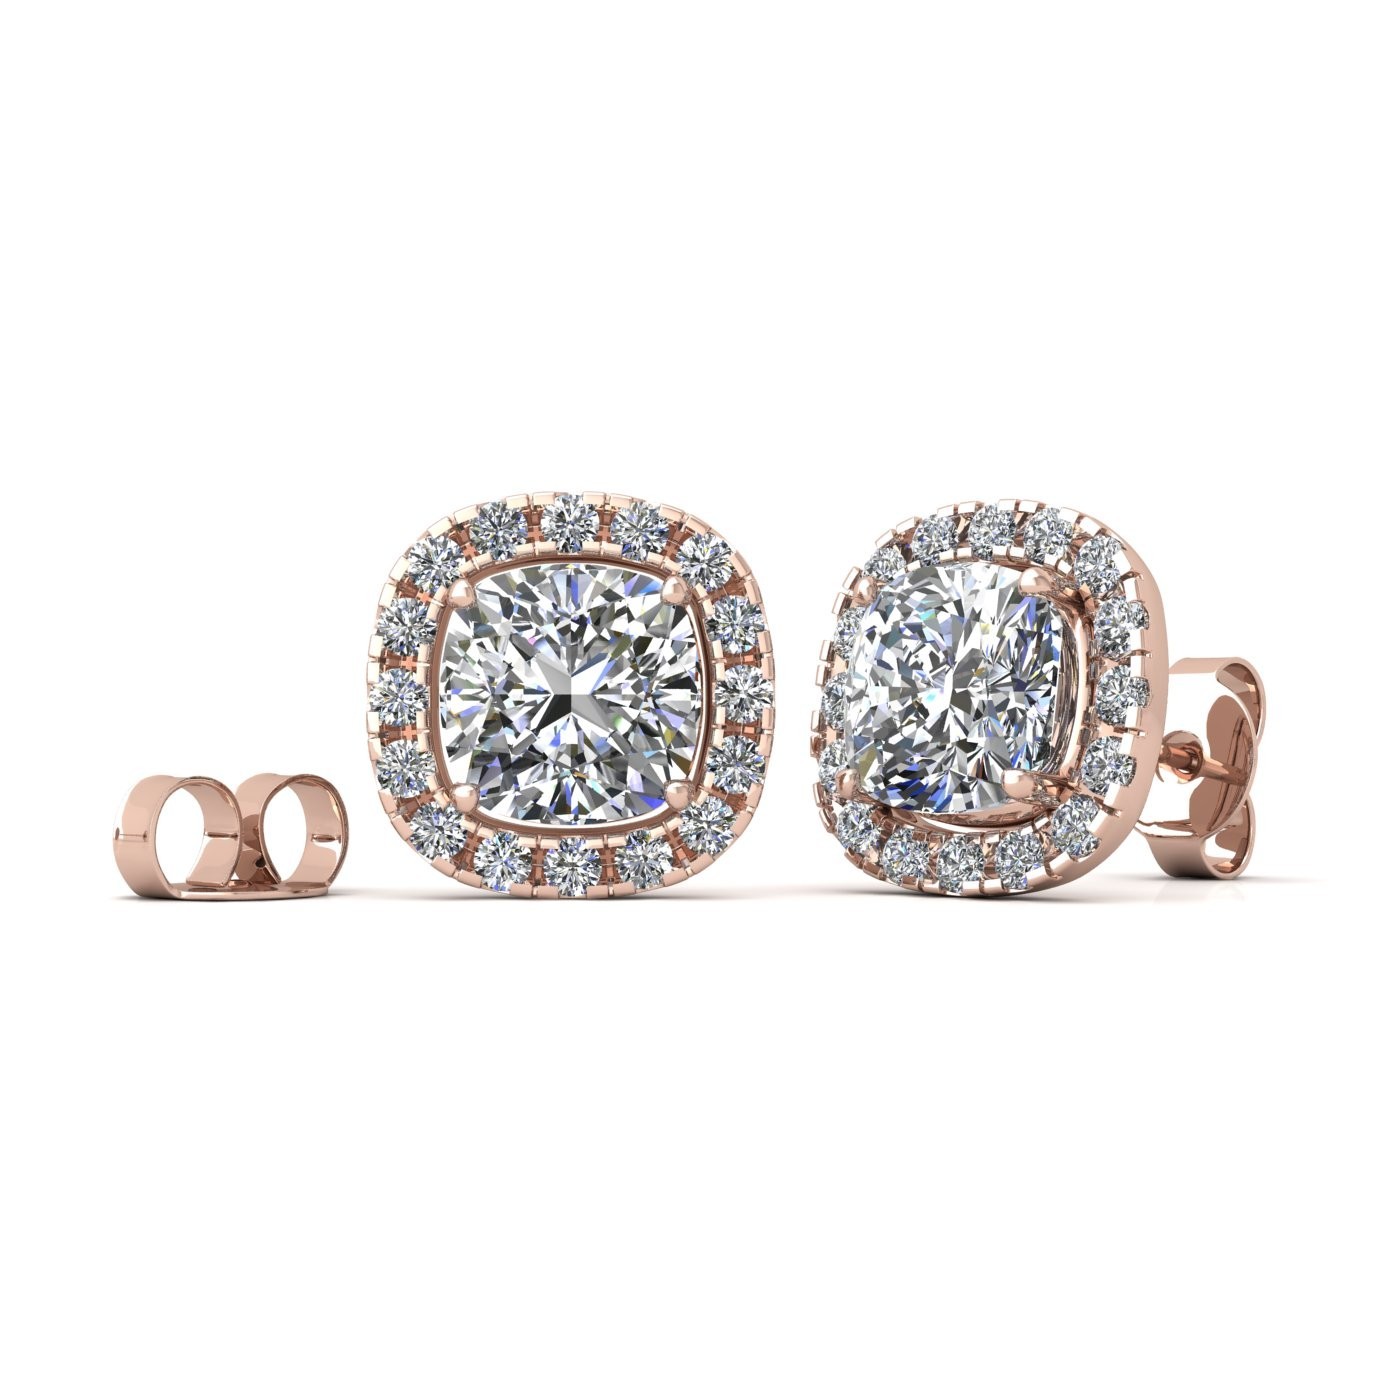 18k rose gold  1,0 ct each (2,0 tcw) 4 prongs cushion shape diamond earrings with diamond pavÉ set halo